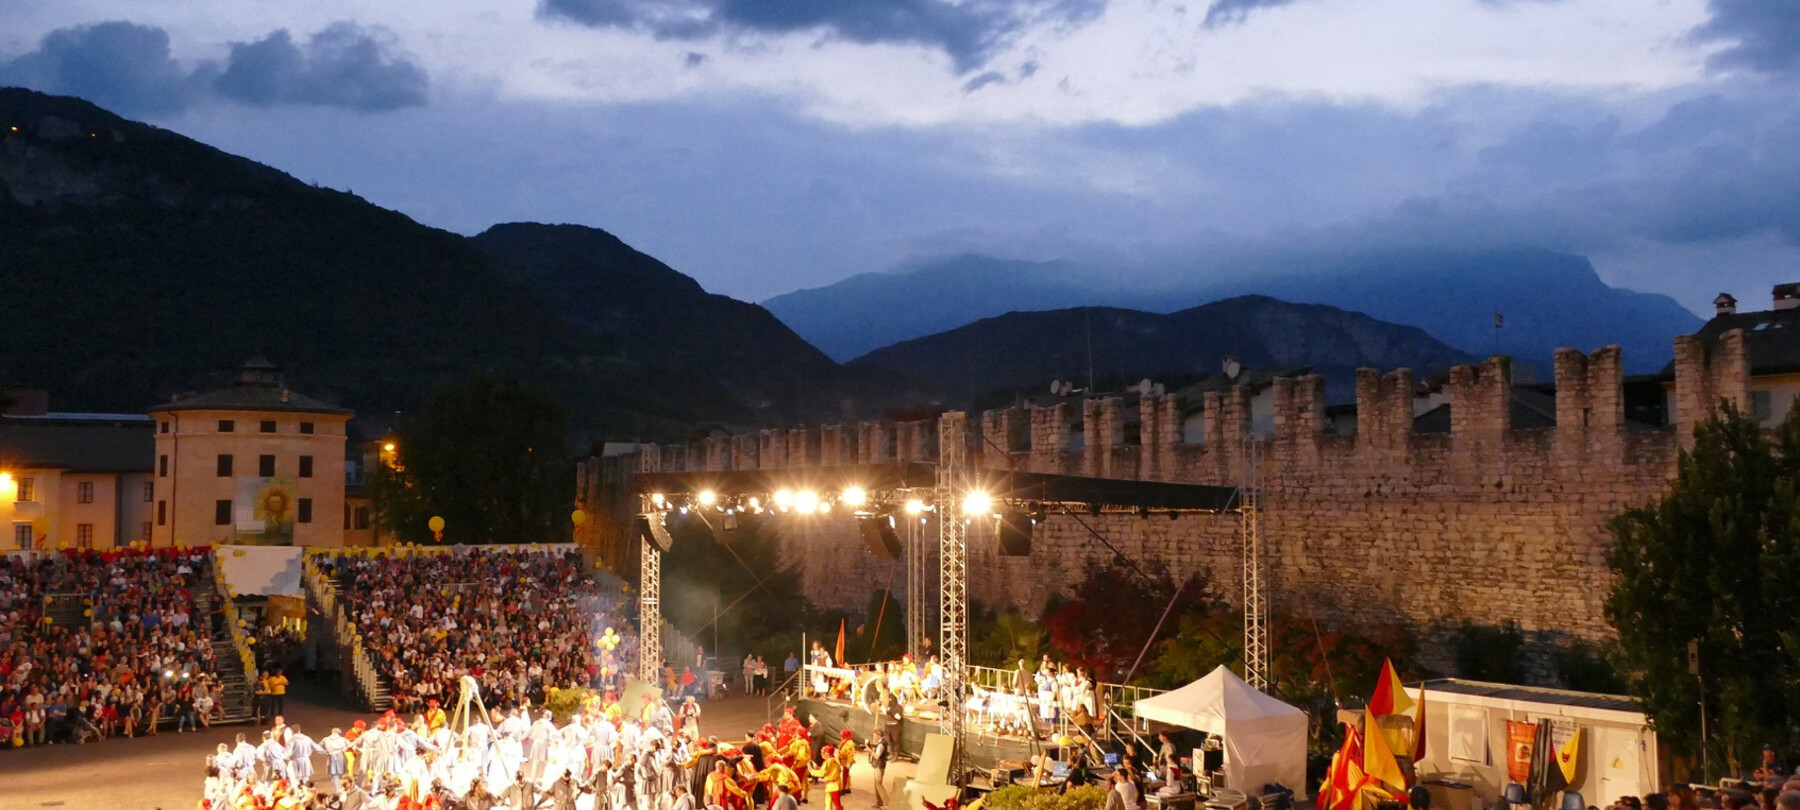 Valle dell'Adige - Trento - Feste Vigiliane